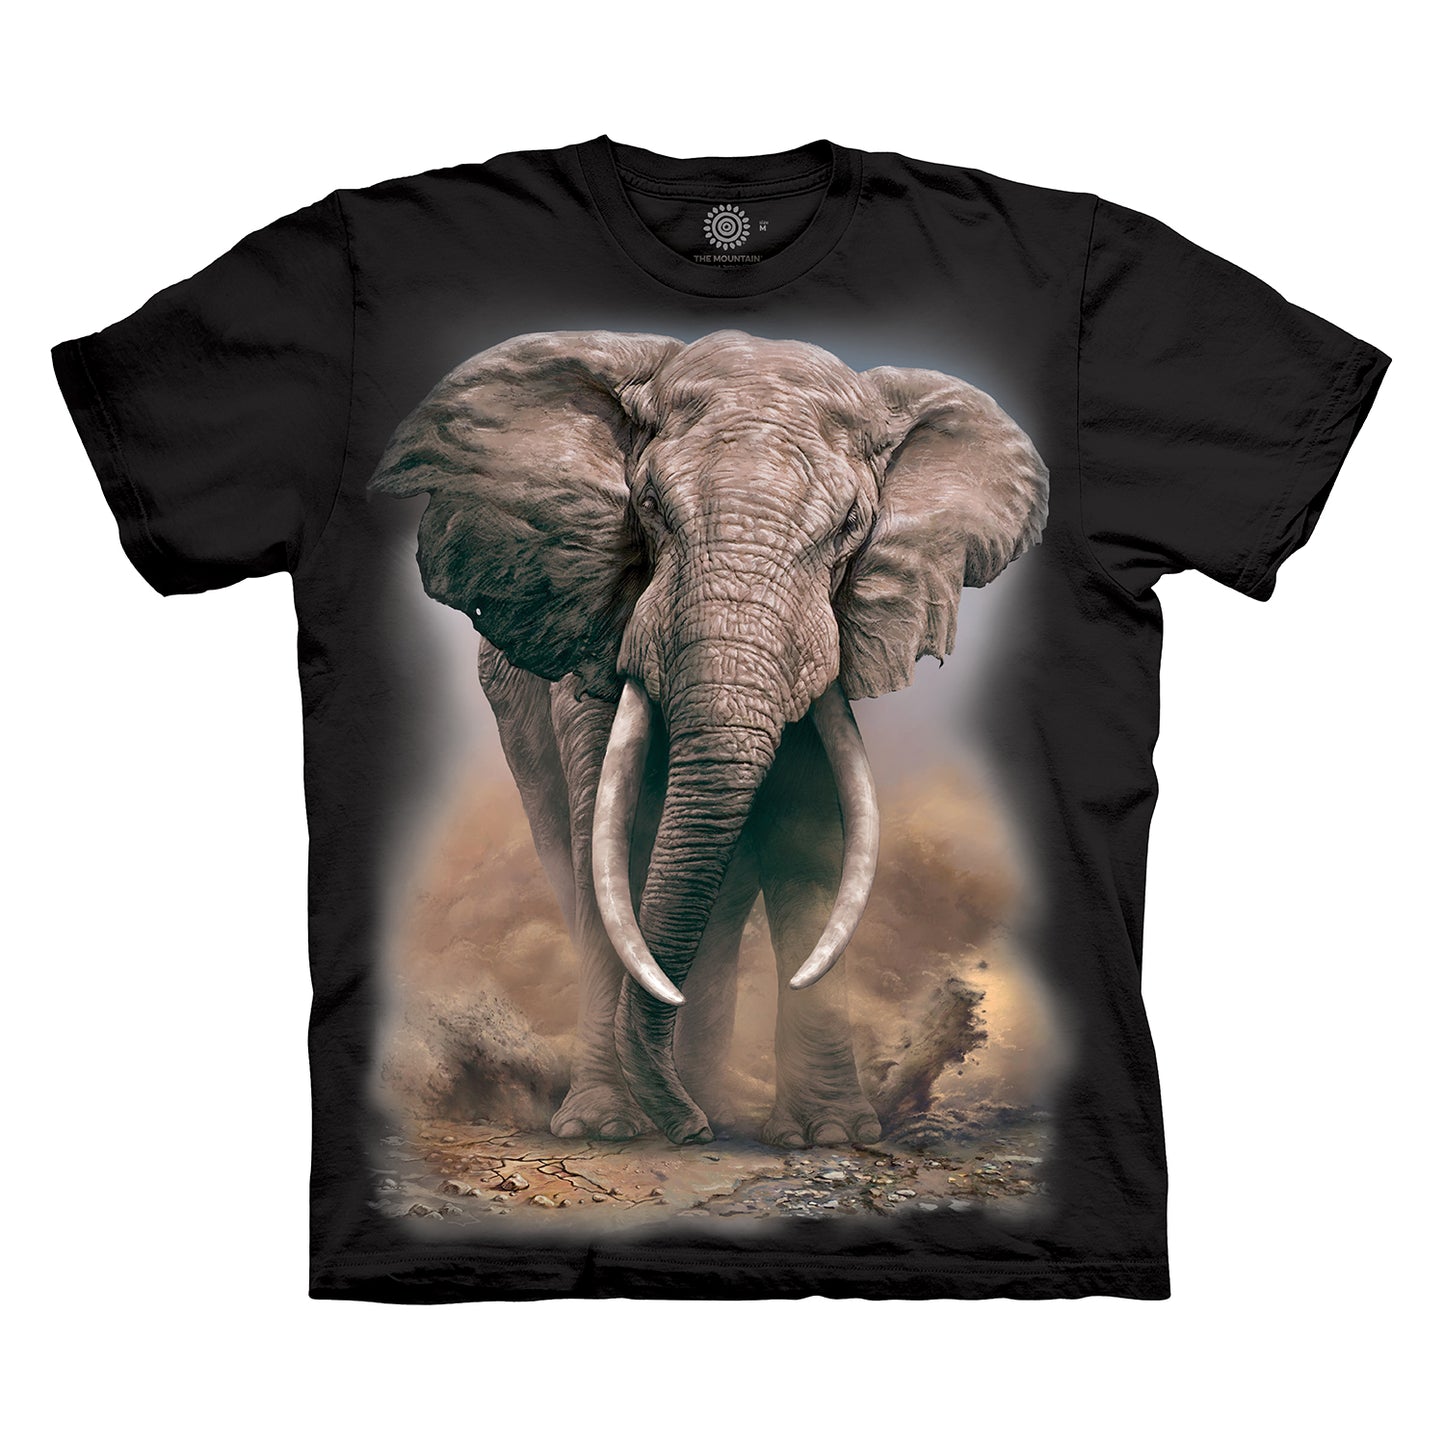 The Mountain Men's African Elephant T-shirt